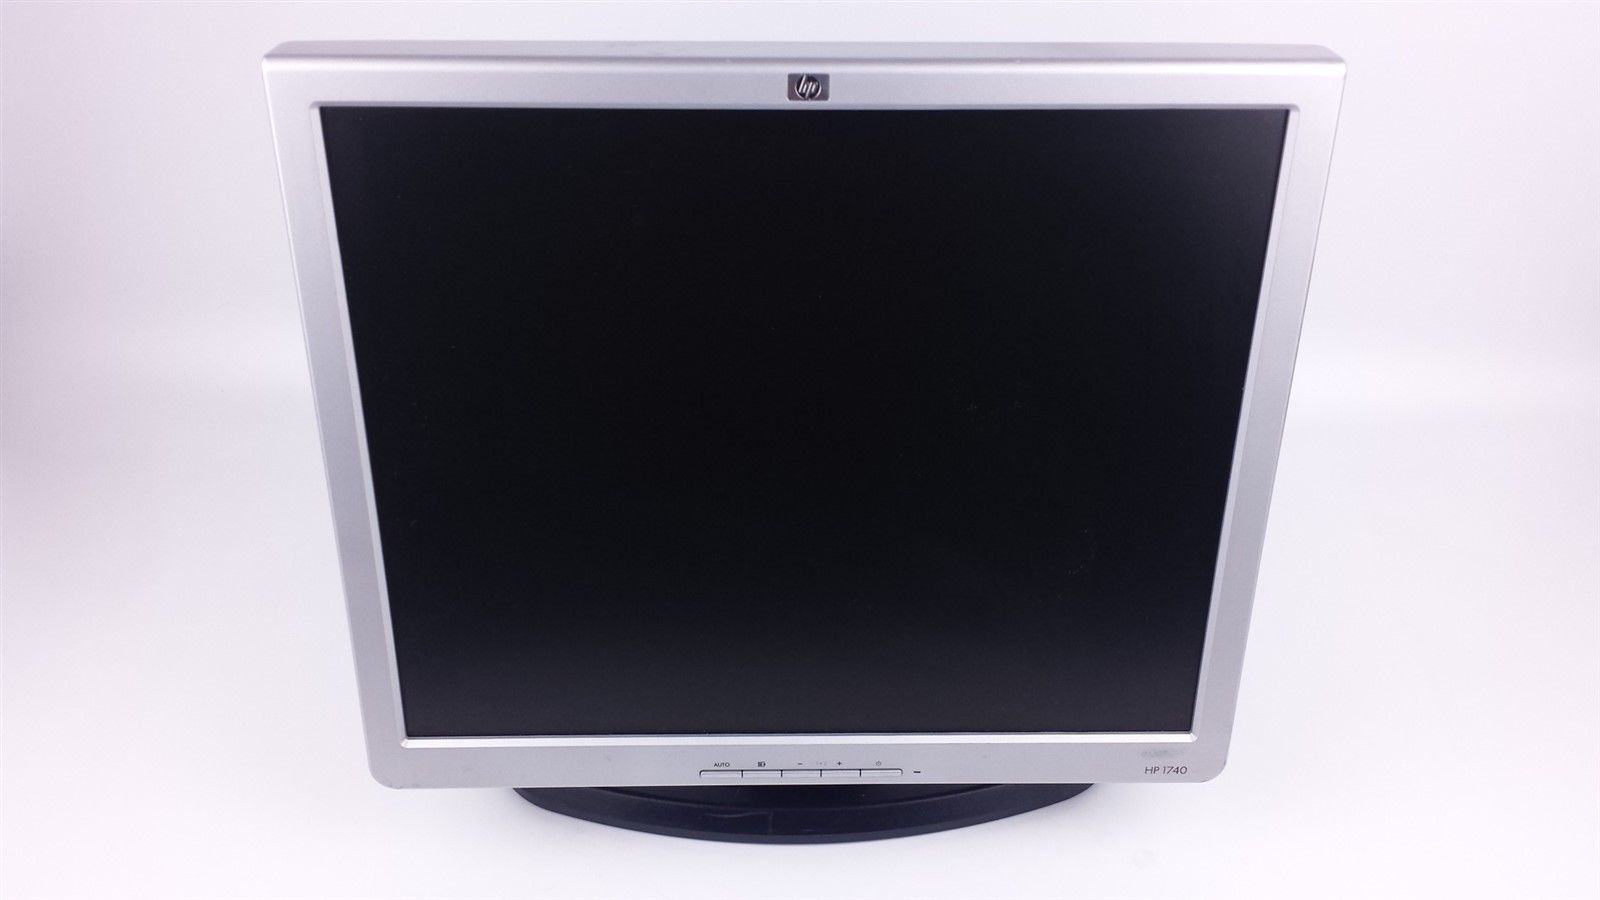 HP 1740 LCD Flat Panel Display Monitor 17" with Power Cord VGA Cord Bunny Stand